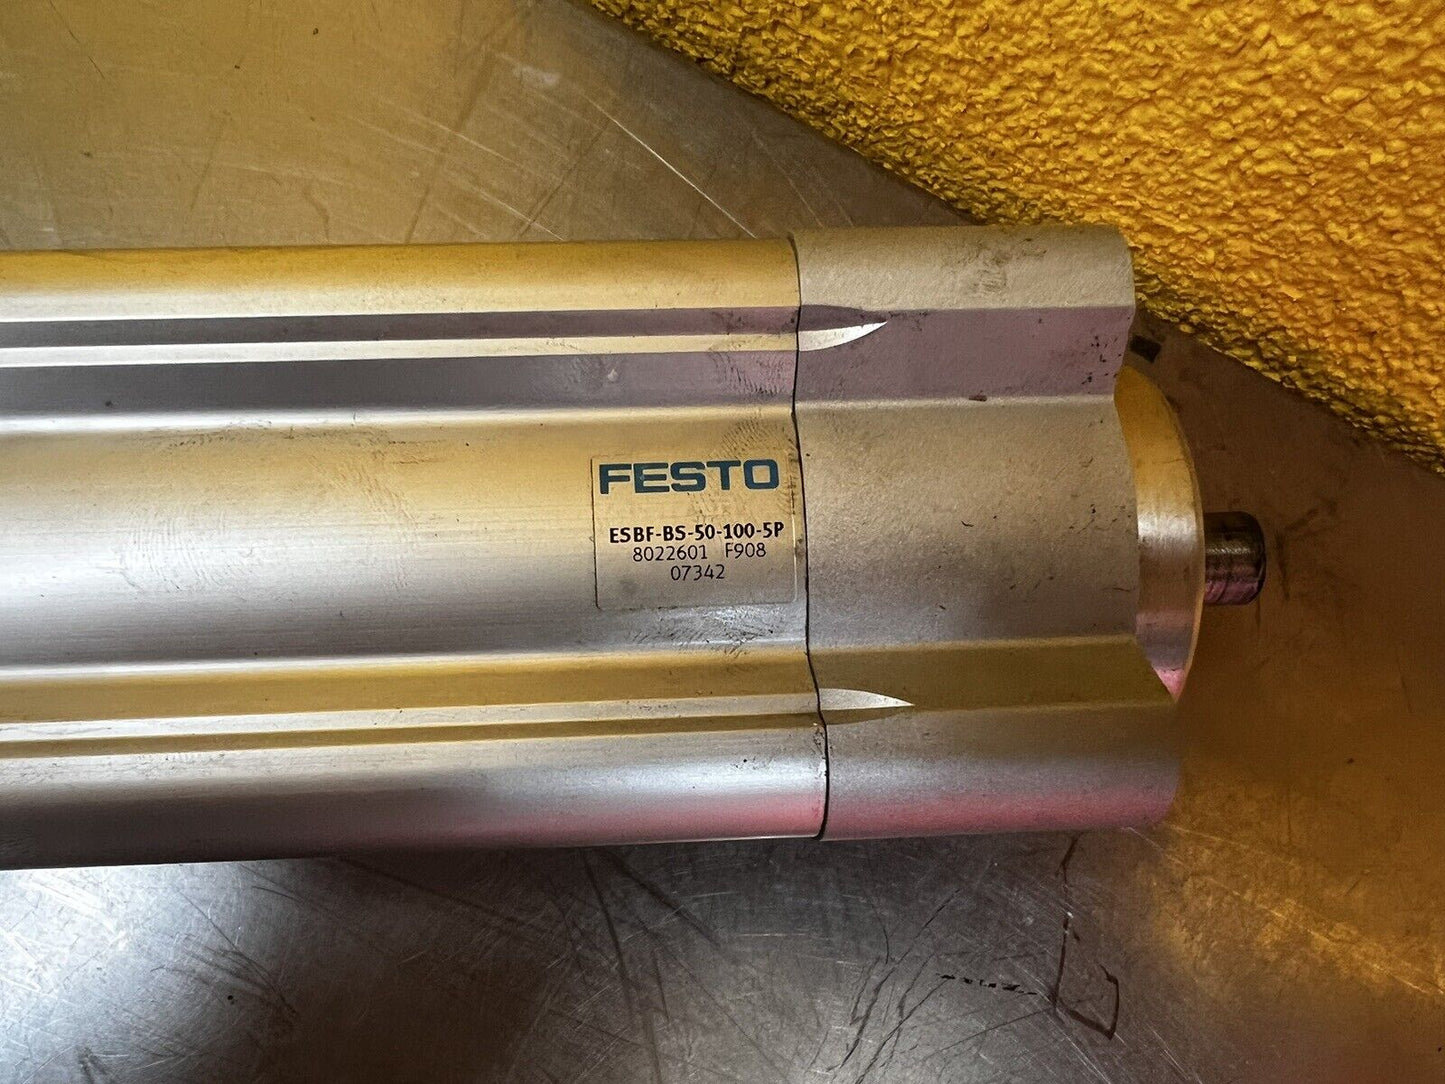 Festo ESBF-BS-50-100-5P Electric cylinder